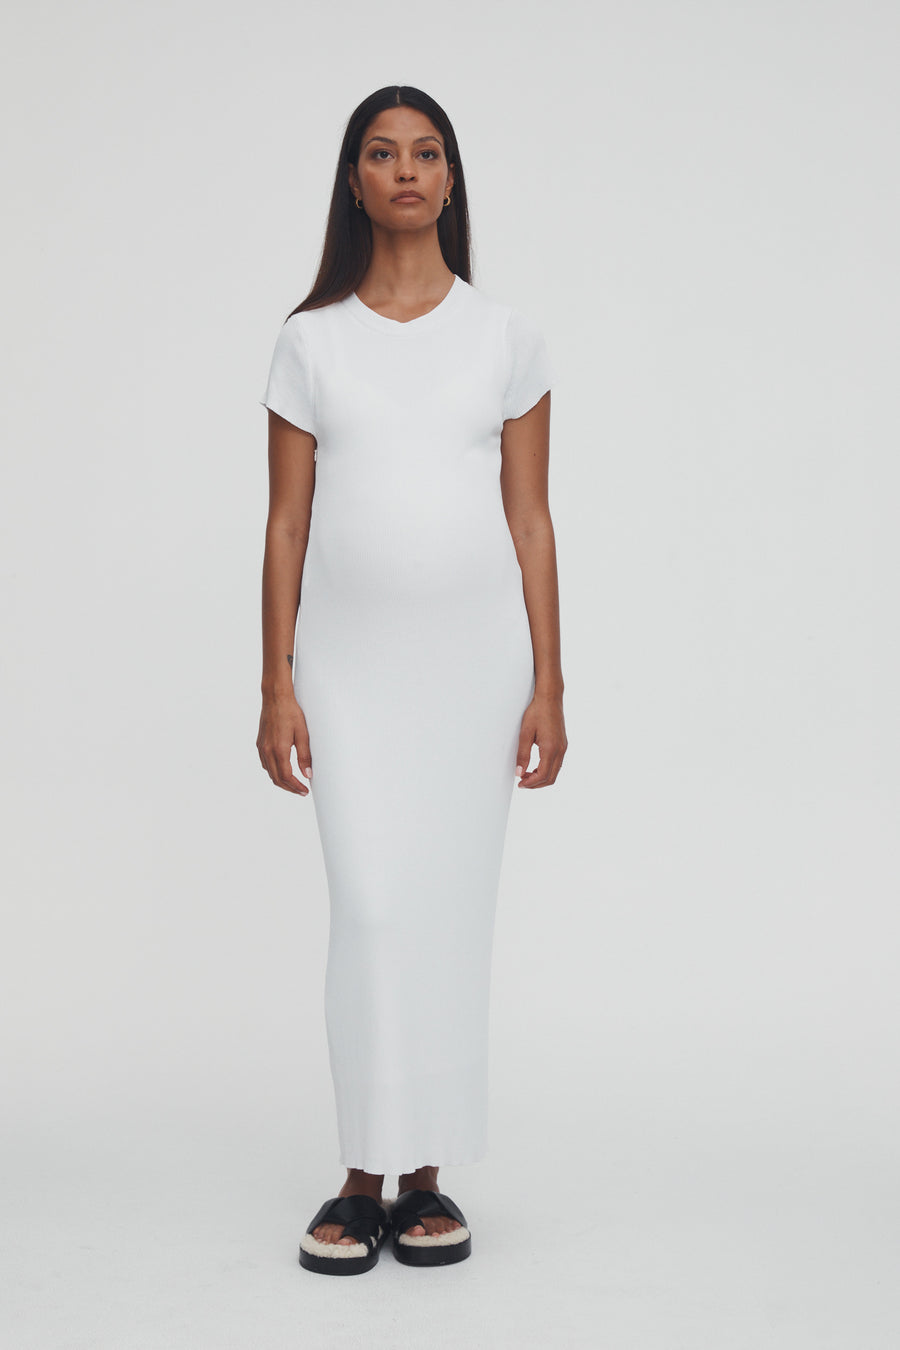 Stylish Babyshower Dress (White) 3